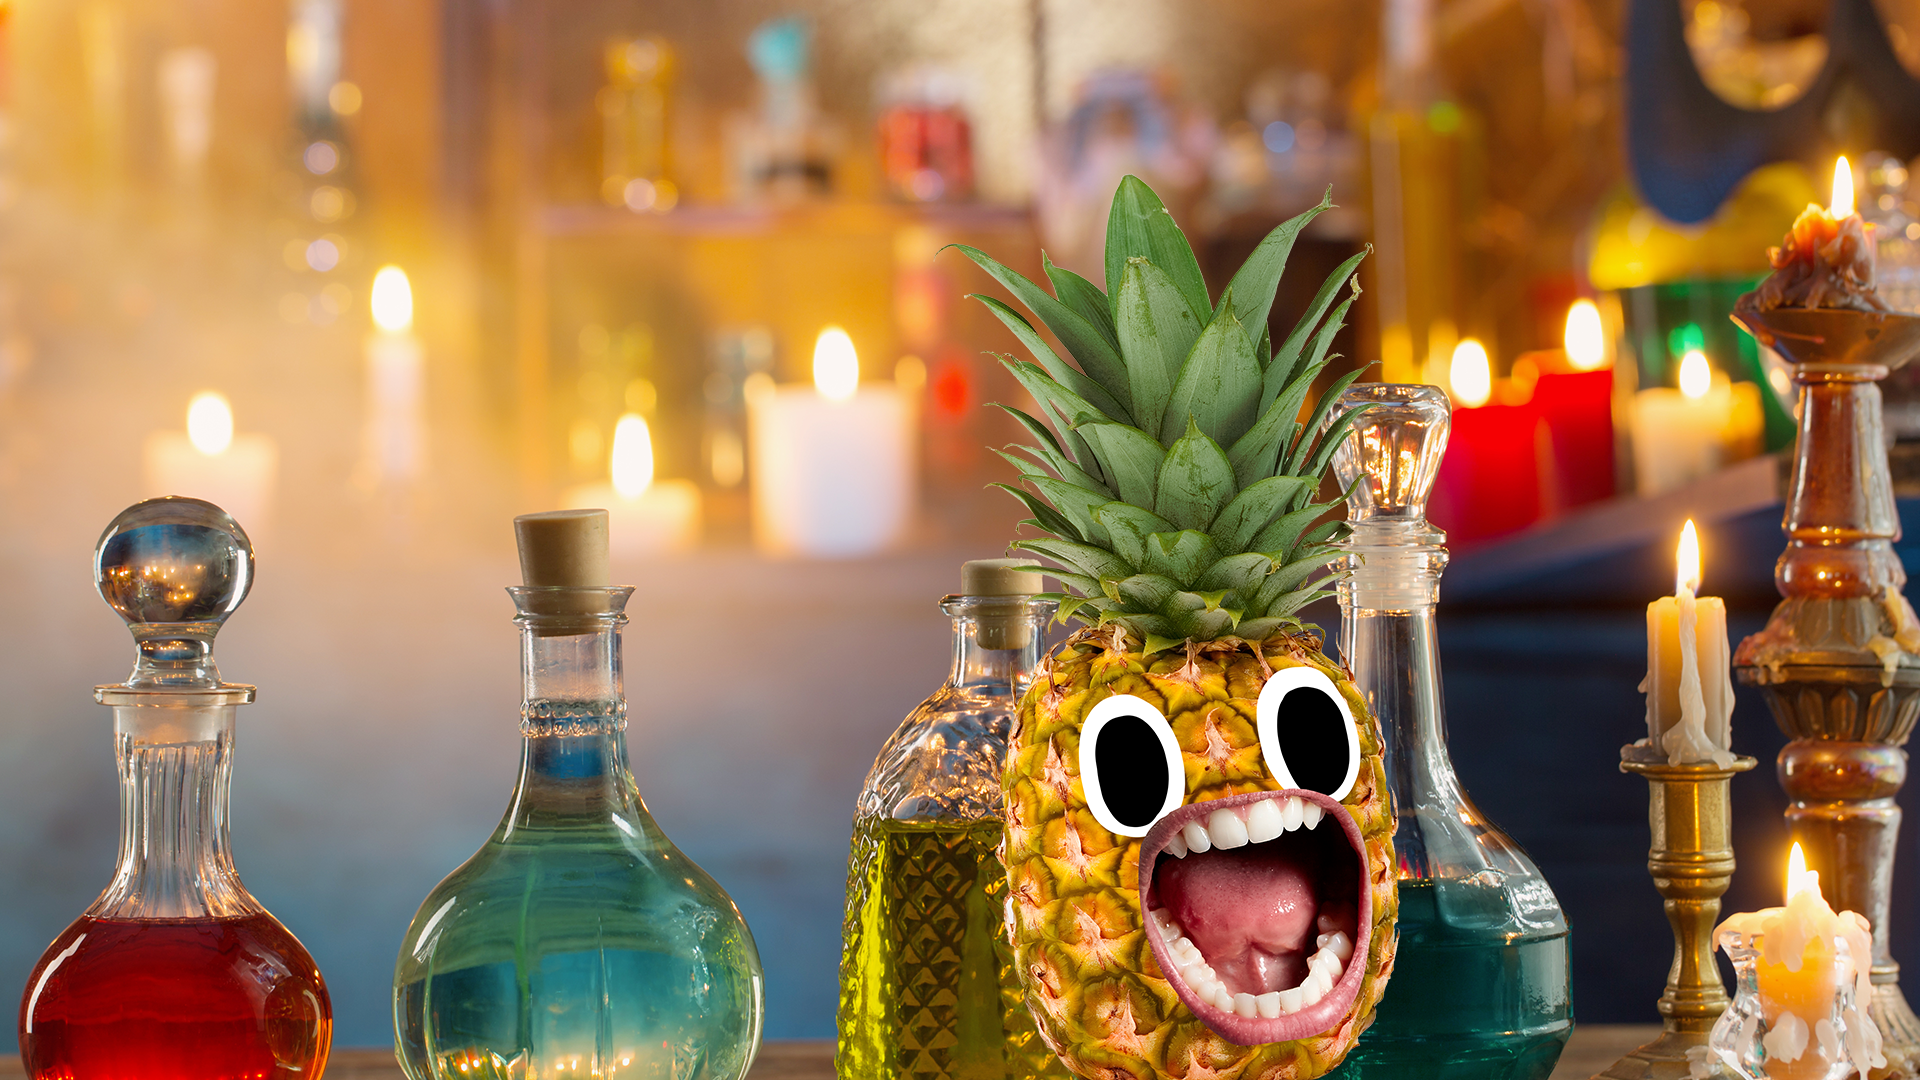 Screaming pineapple next to potion bottles 